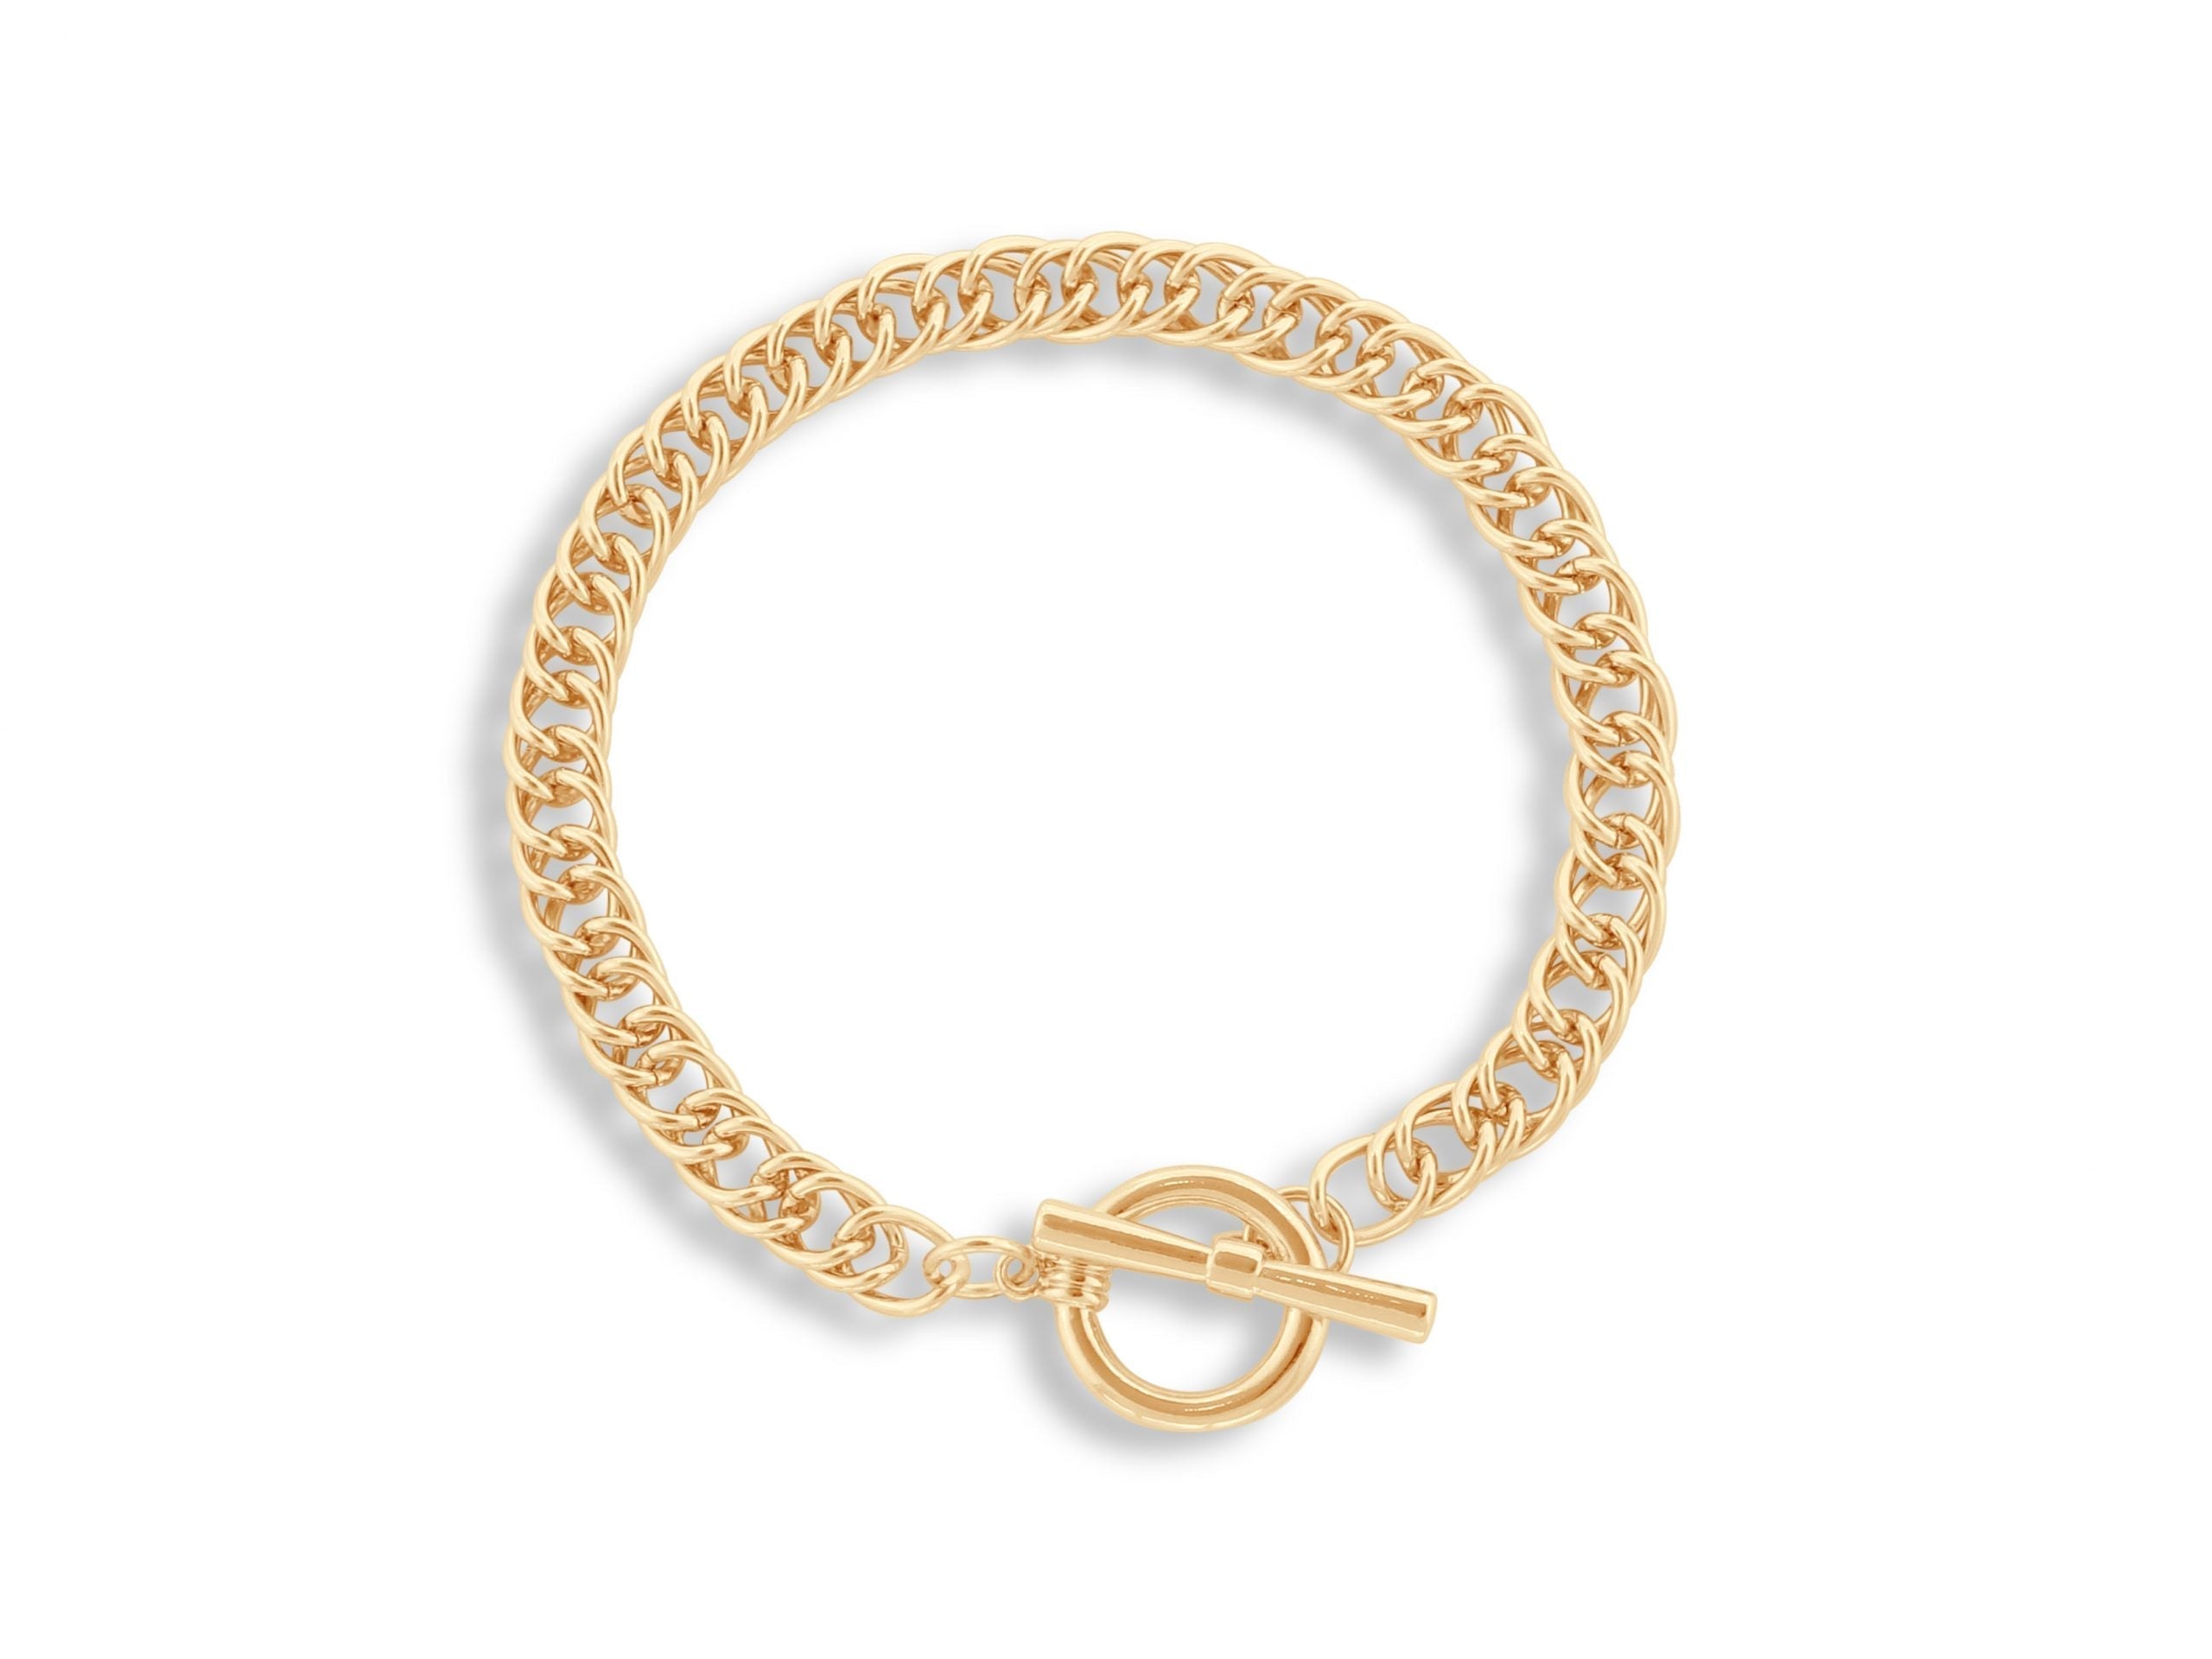 Gold Molly Curb Bracelet - The Nancy Smillie Shop - Art, Jewellery & Designer Gifts Glasgow